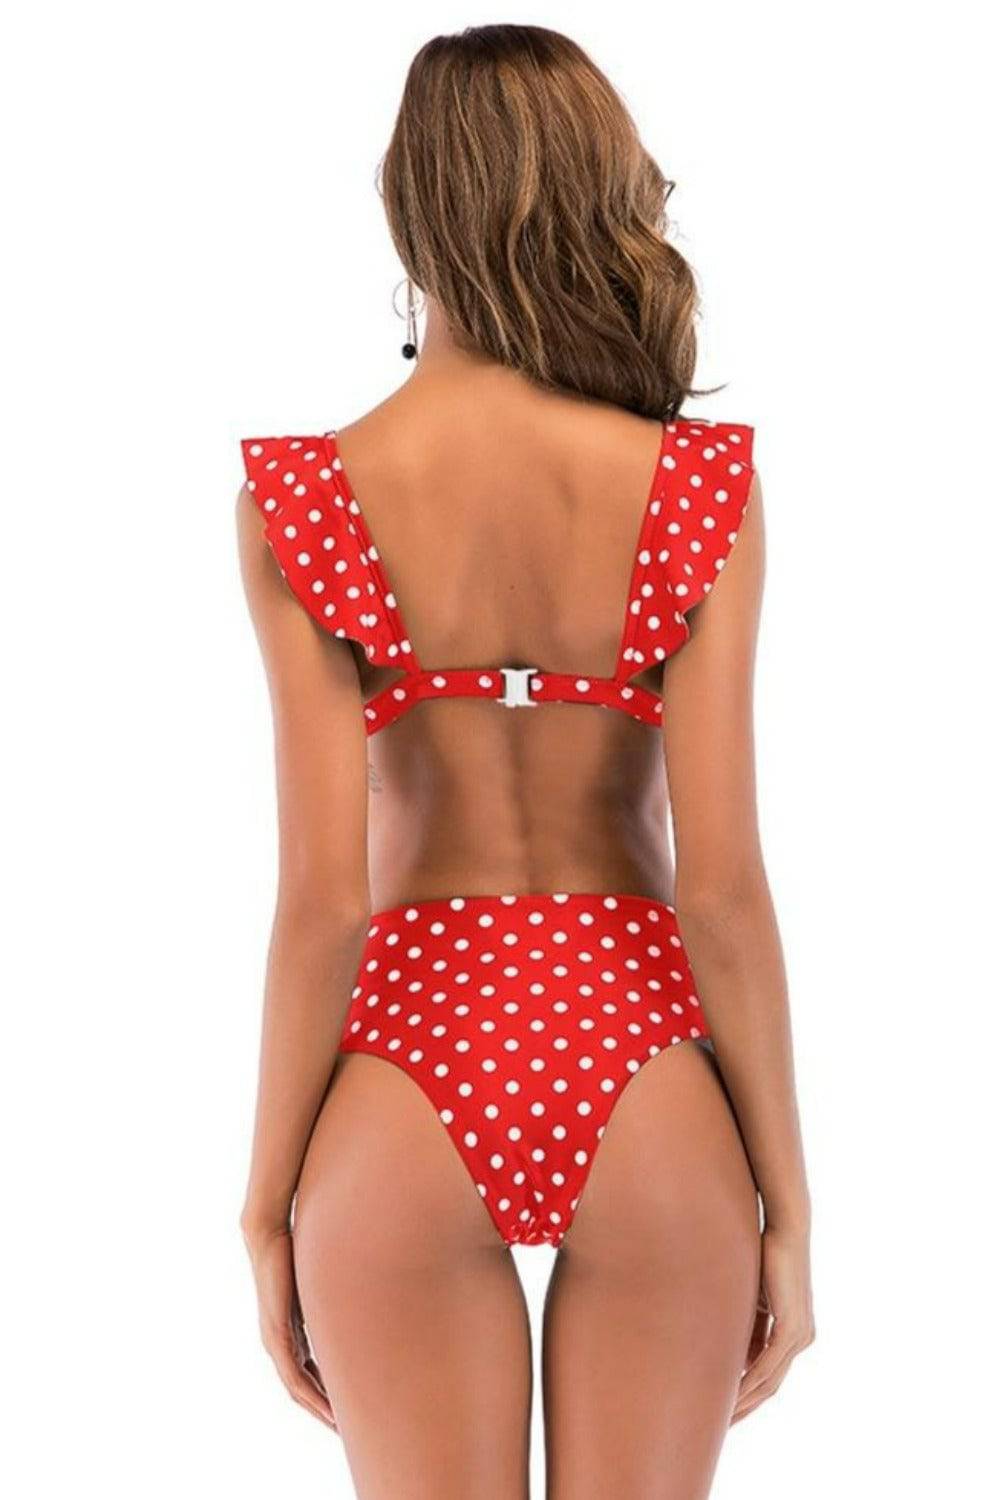 Rachel Polka Dot Ruffle Red High Waisted Bikini - TGC Boutique - Bikini